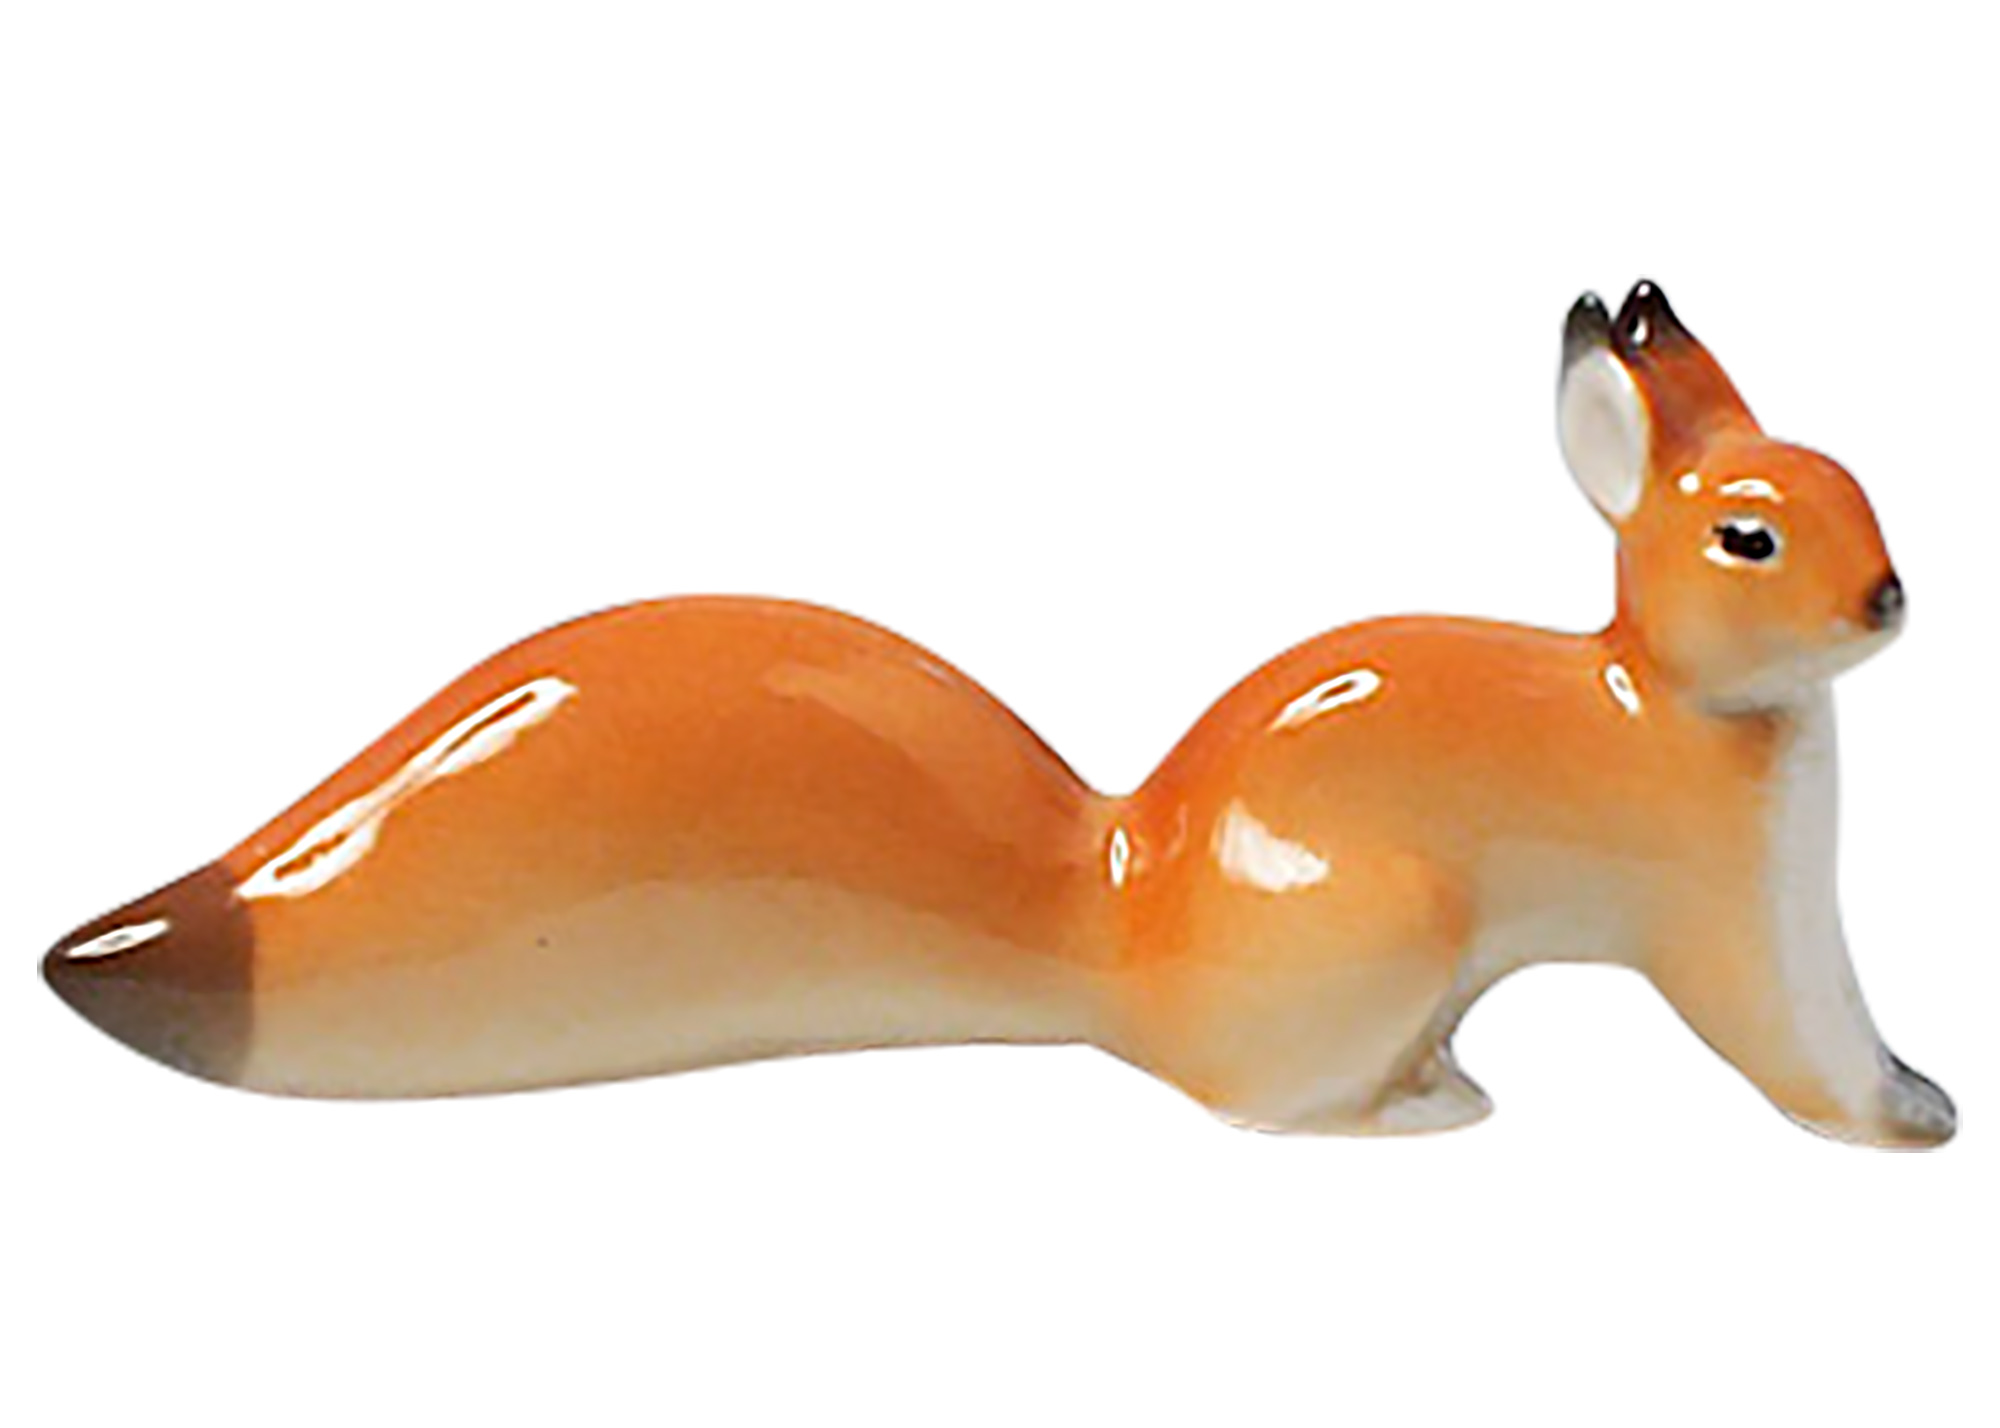 Buy Red Squirrel Figurine Looking Forward at GoldenCockerel.com